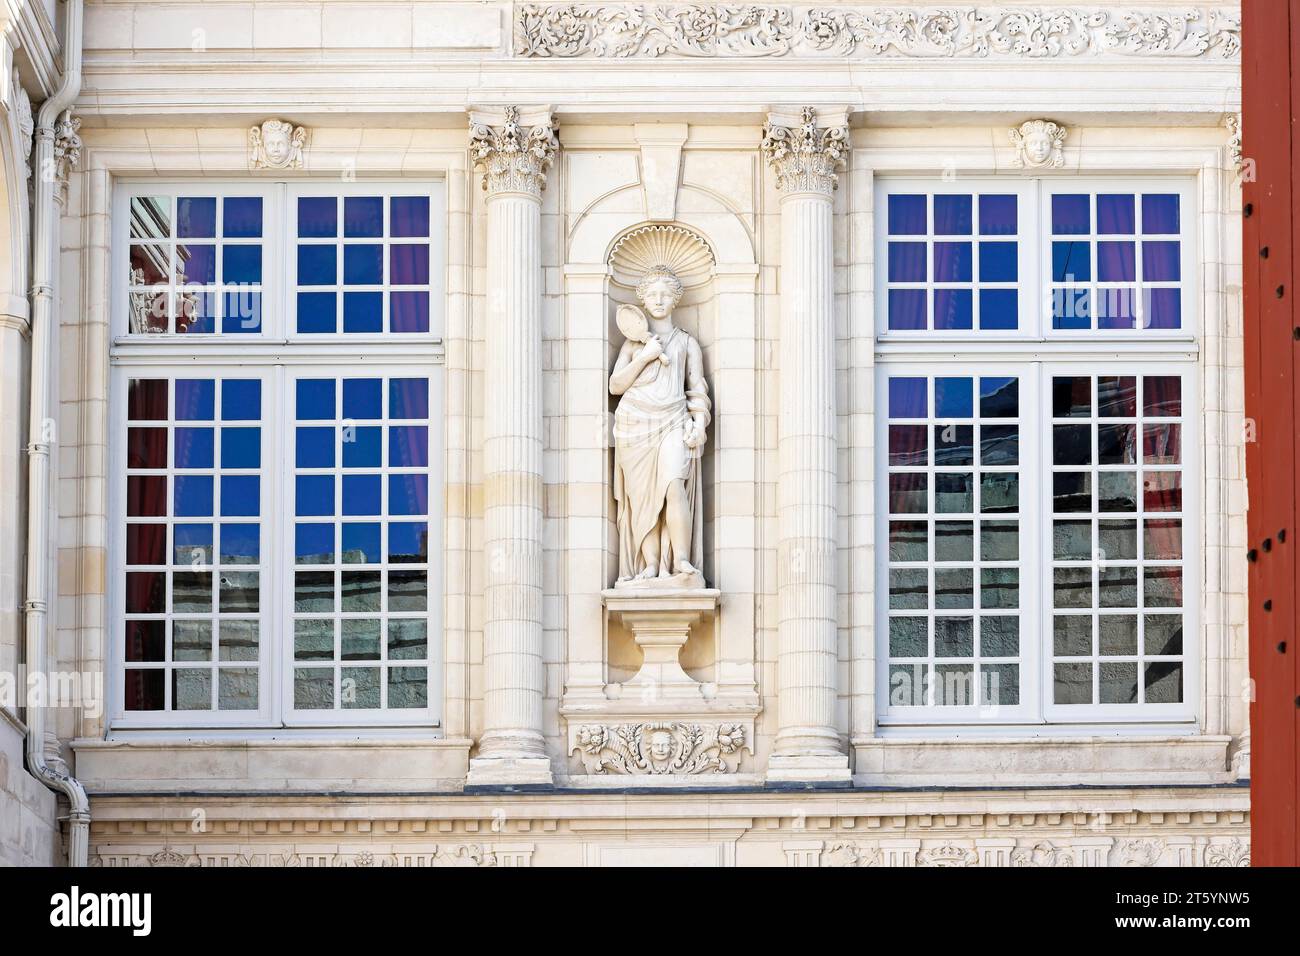 Historic Town Hall of La Rochelle, Hotel de Ville, decorative facade, detail with sculpture, Charente-Maritime department, France Stock Photo